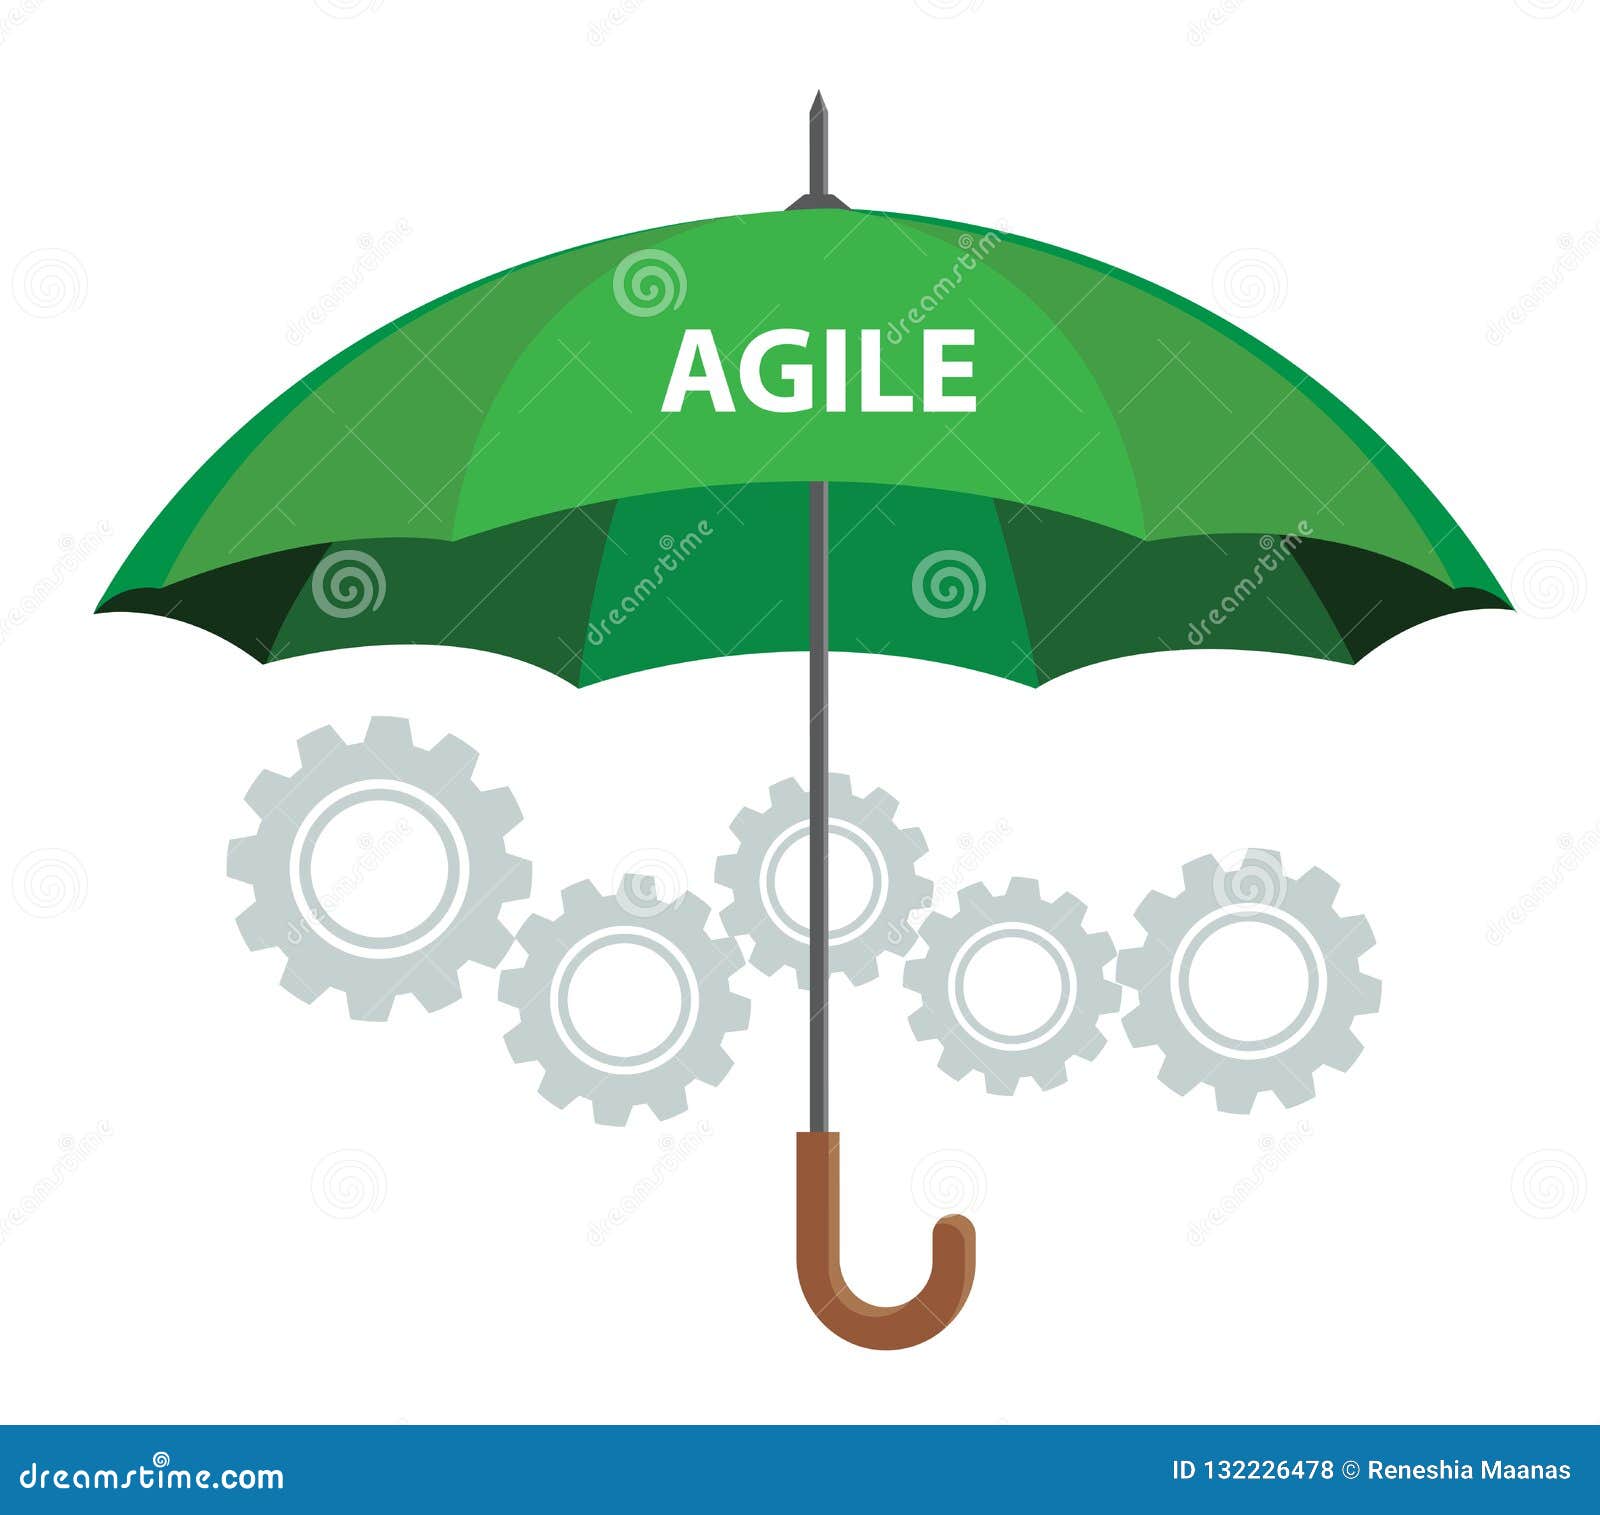 agile methodology concept